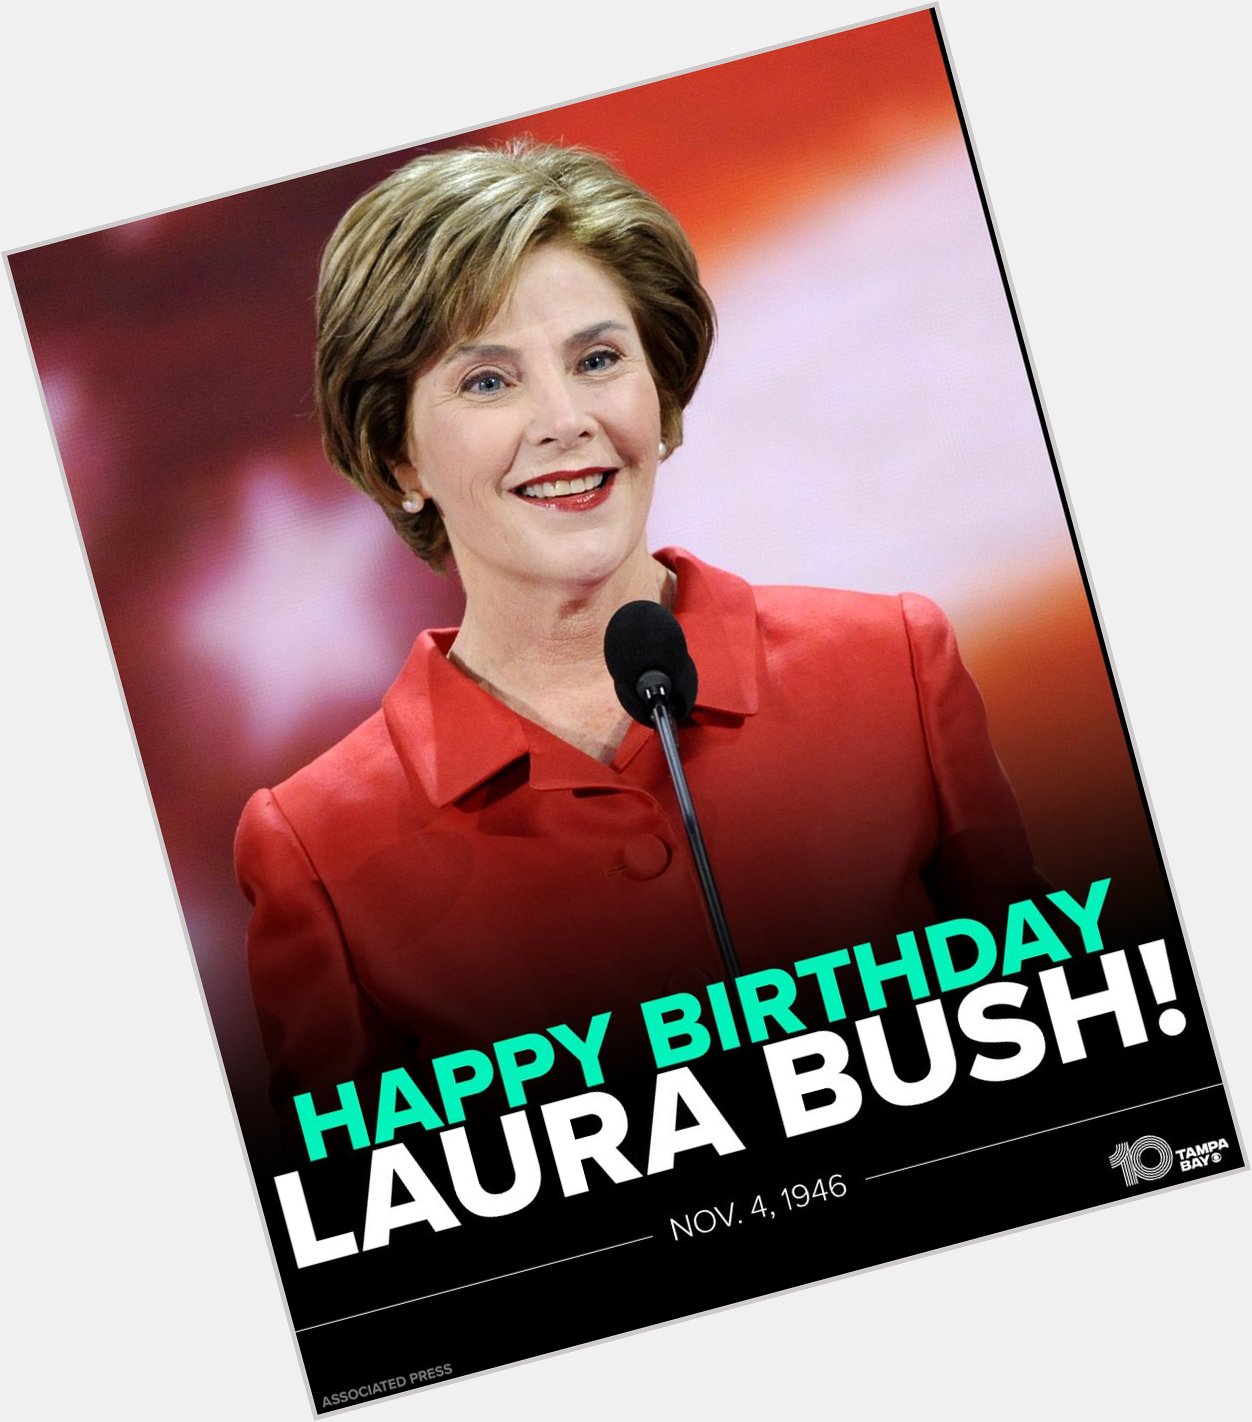 HAPPY BIRTHDAY Former First Lady Laura Bush is celebrating her 75th birthday today! 